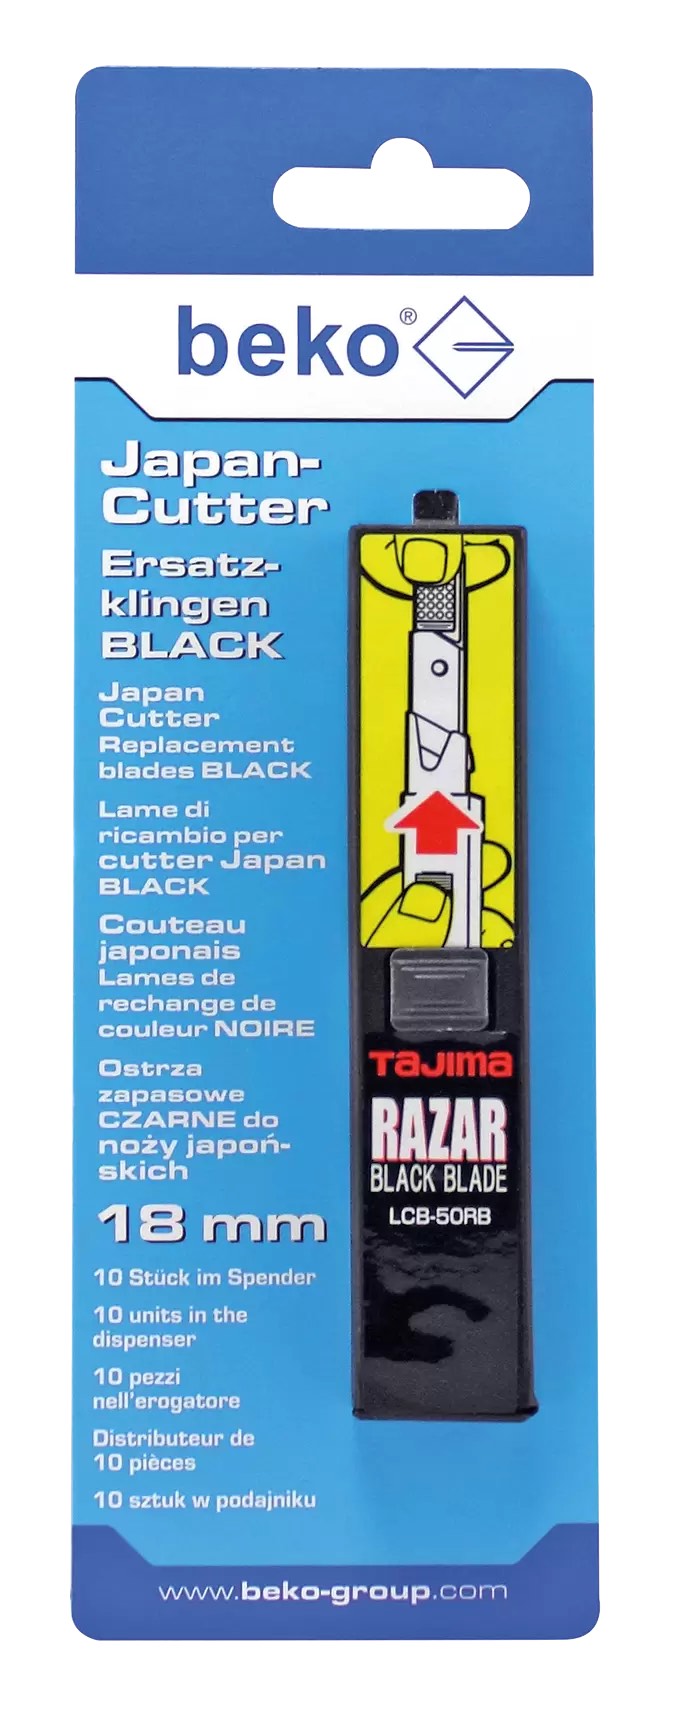 beko Japan-Cutter Ersatzklingen black - 10 Stück im Spender